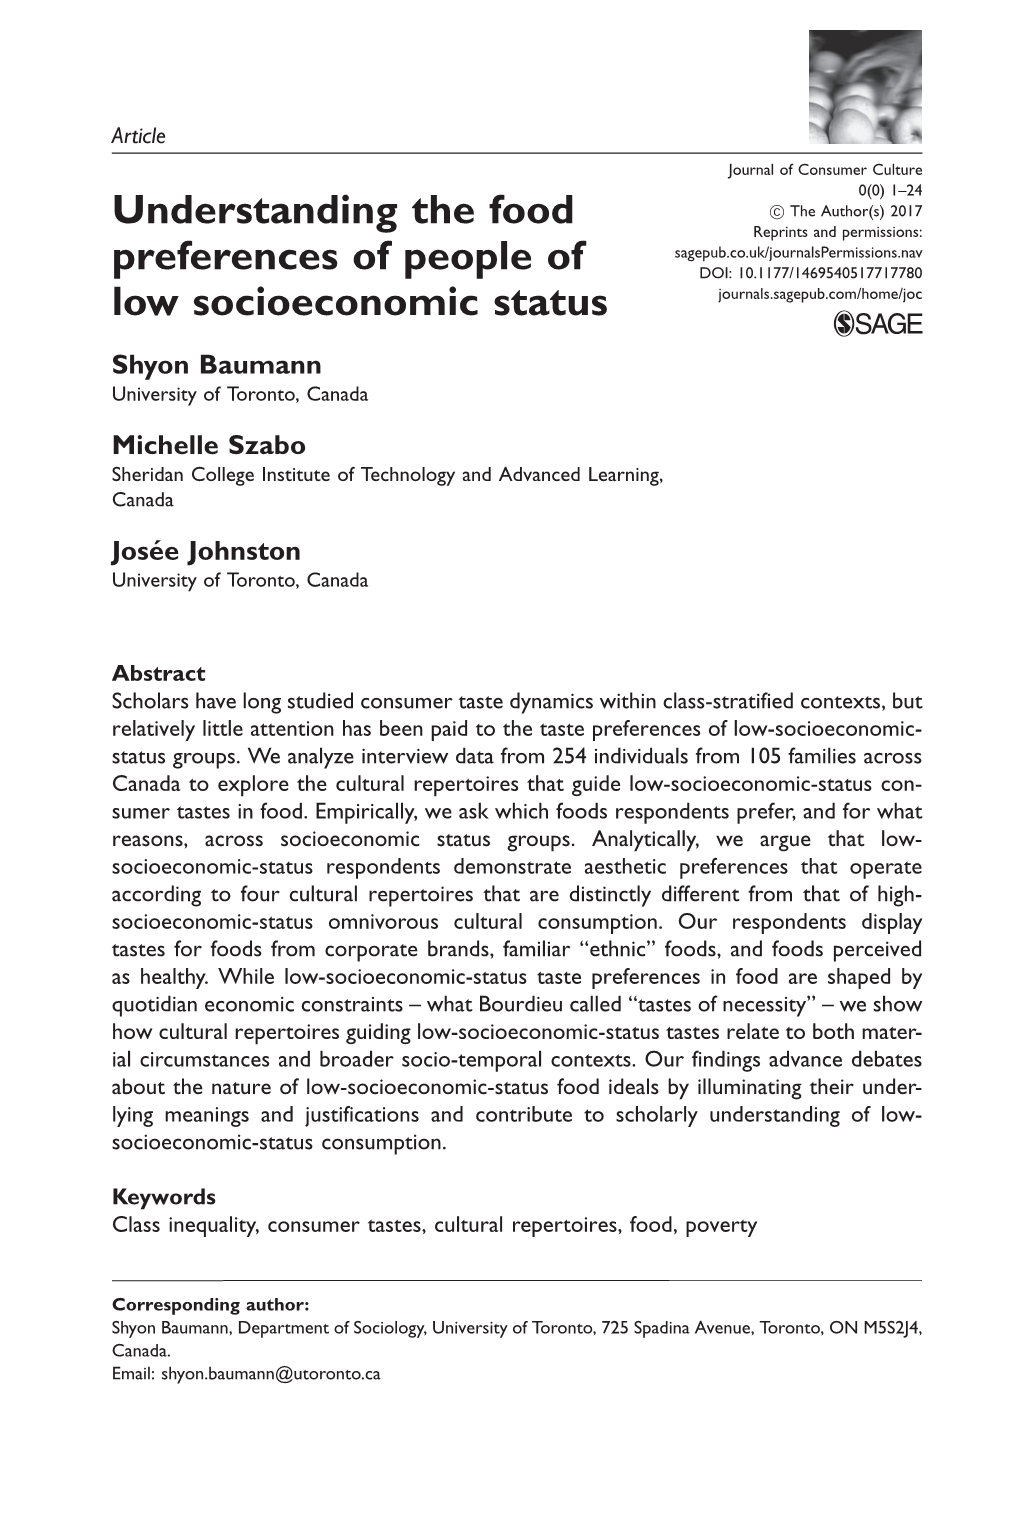 Understanding the Food Preferences of People of Low Socioeconomic Status